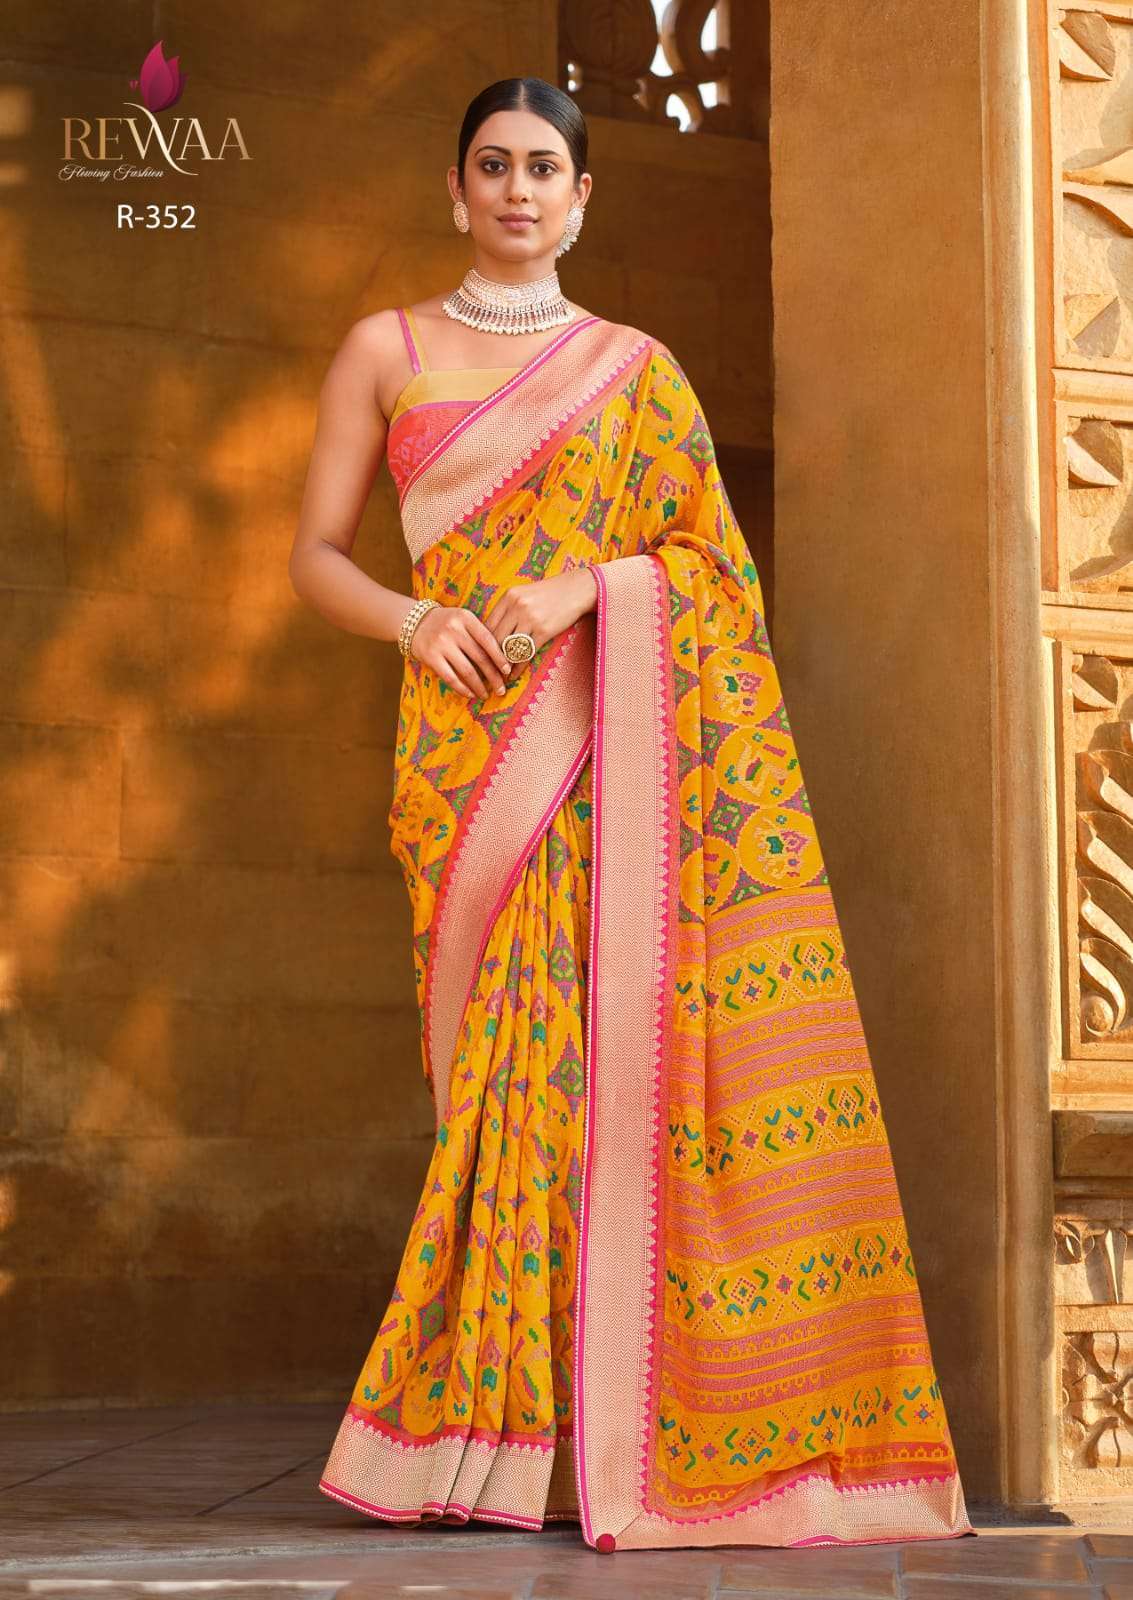 Rewaa presents Samantha 351-352 hit design color patola brasso sarees catalog collection 